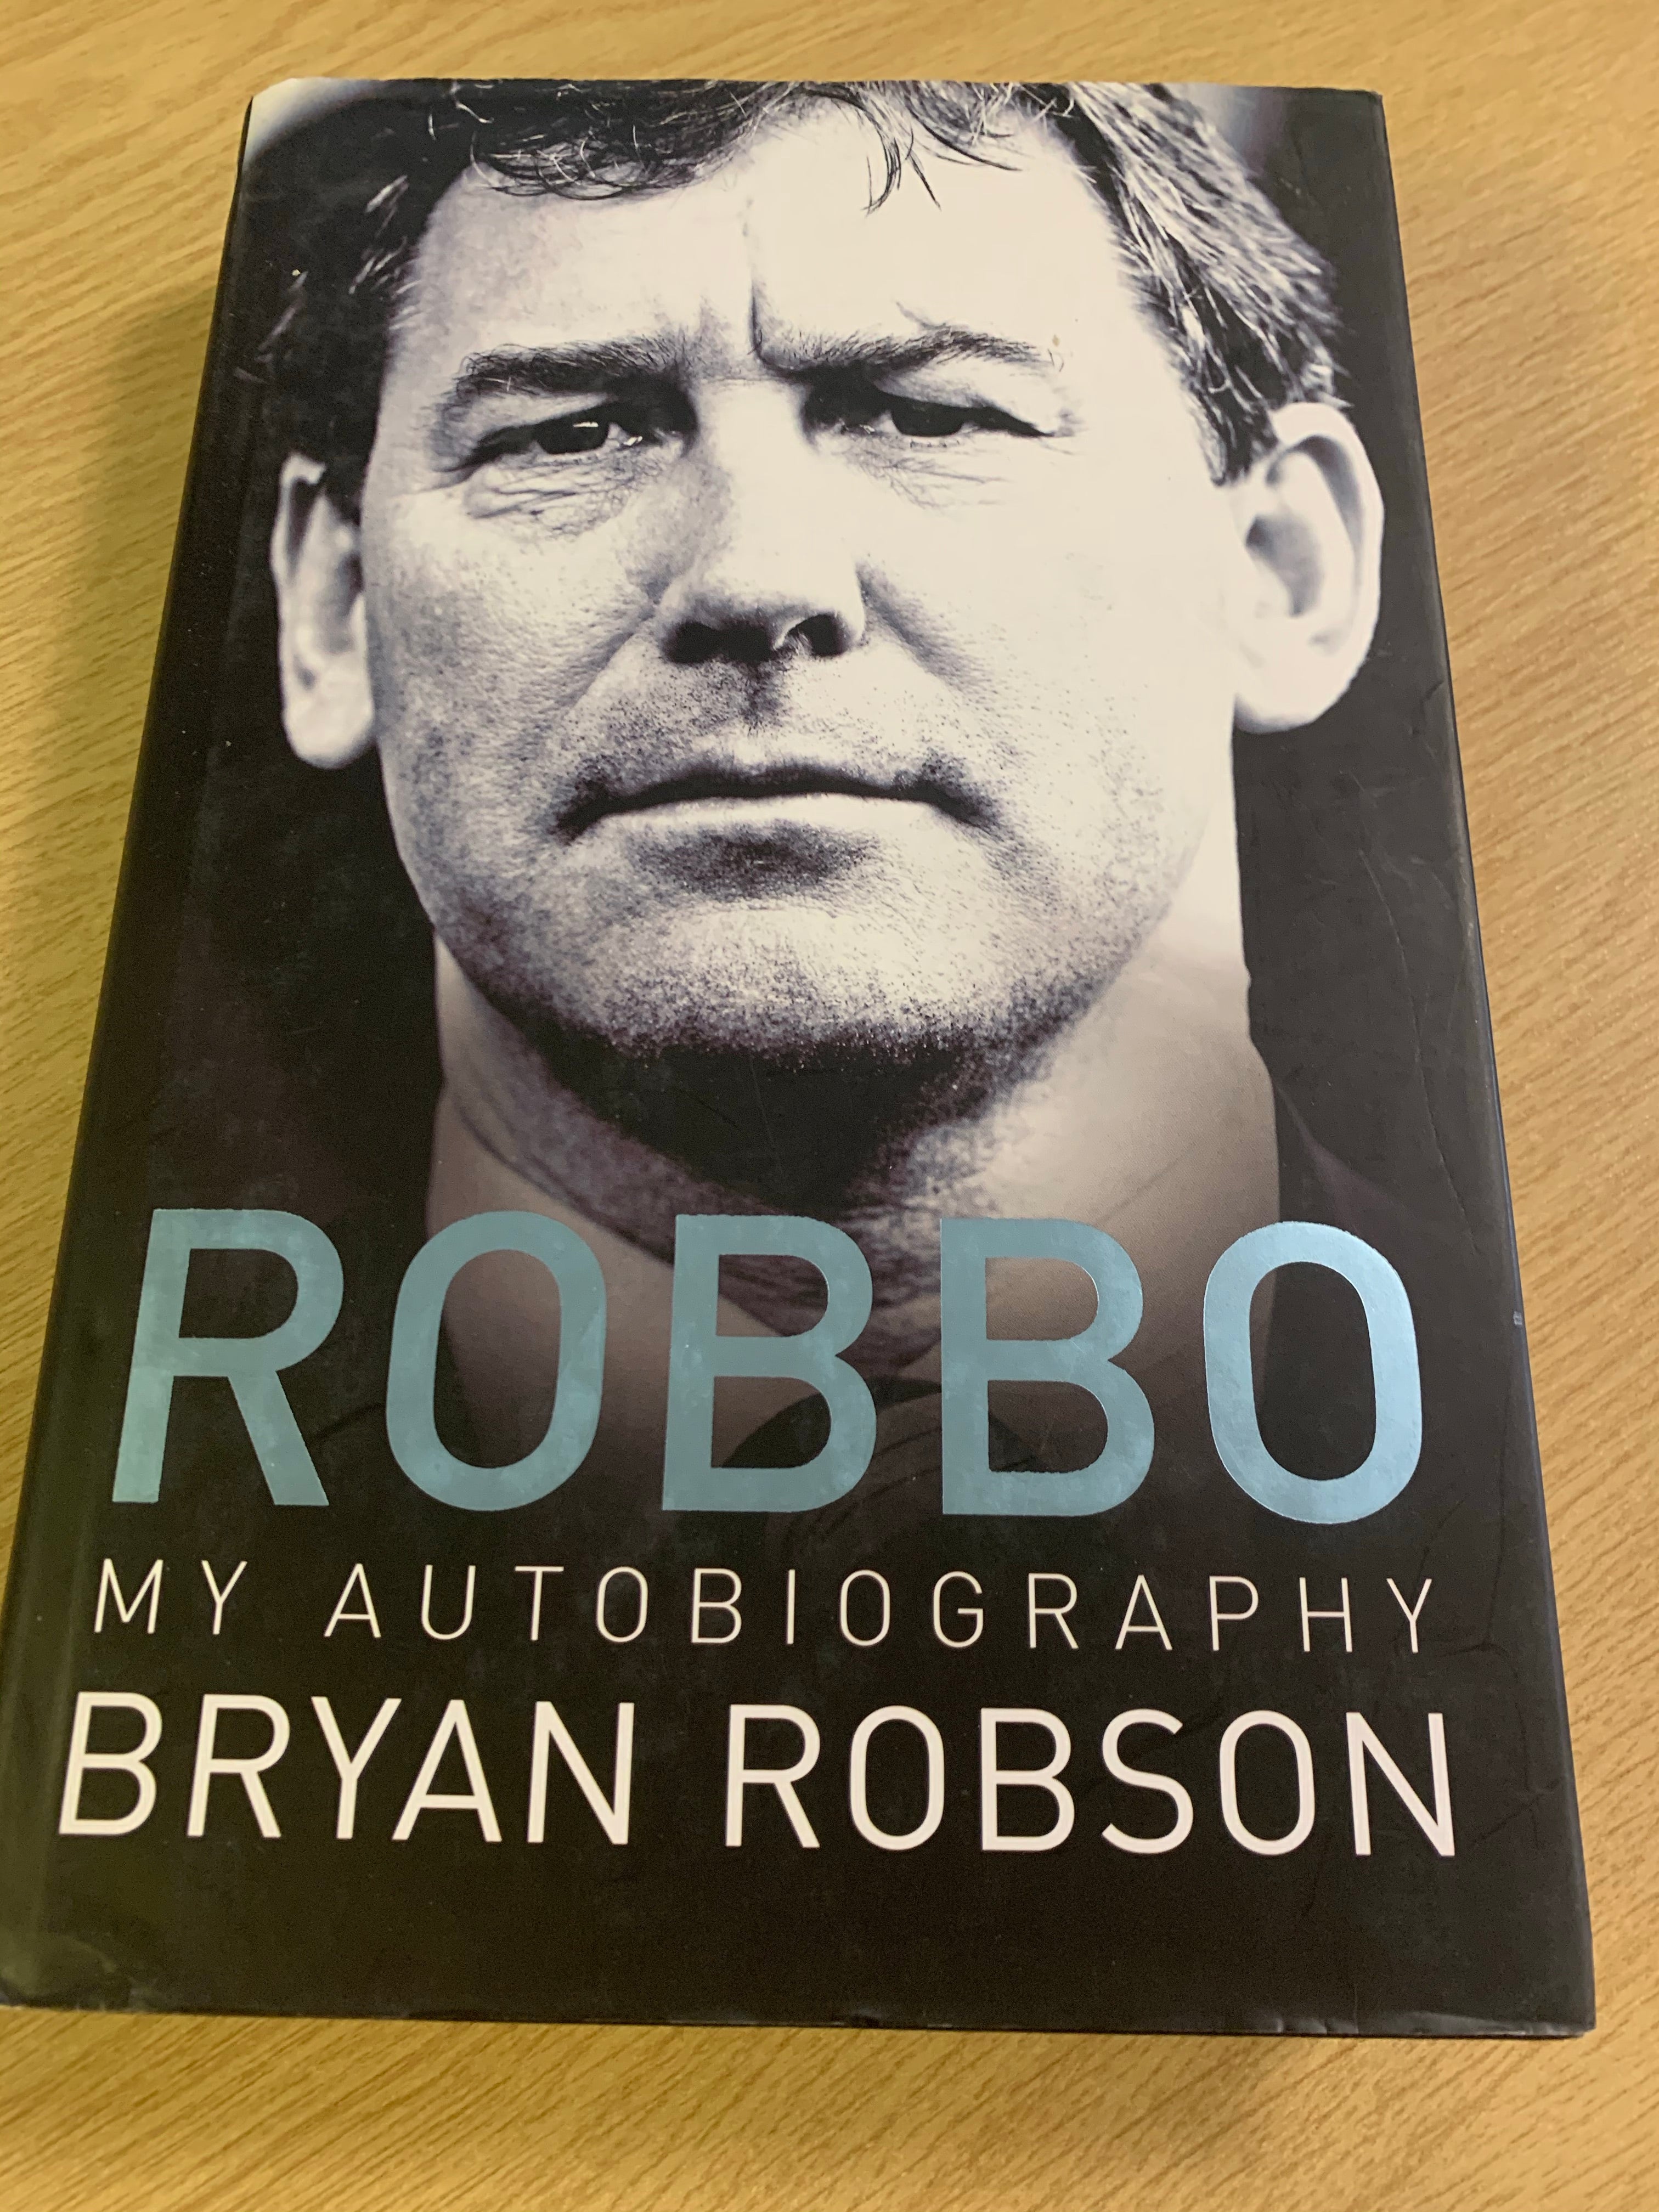 Robbo My Autobiography - Bryan Robson